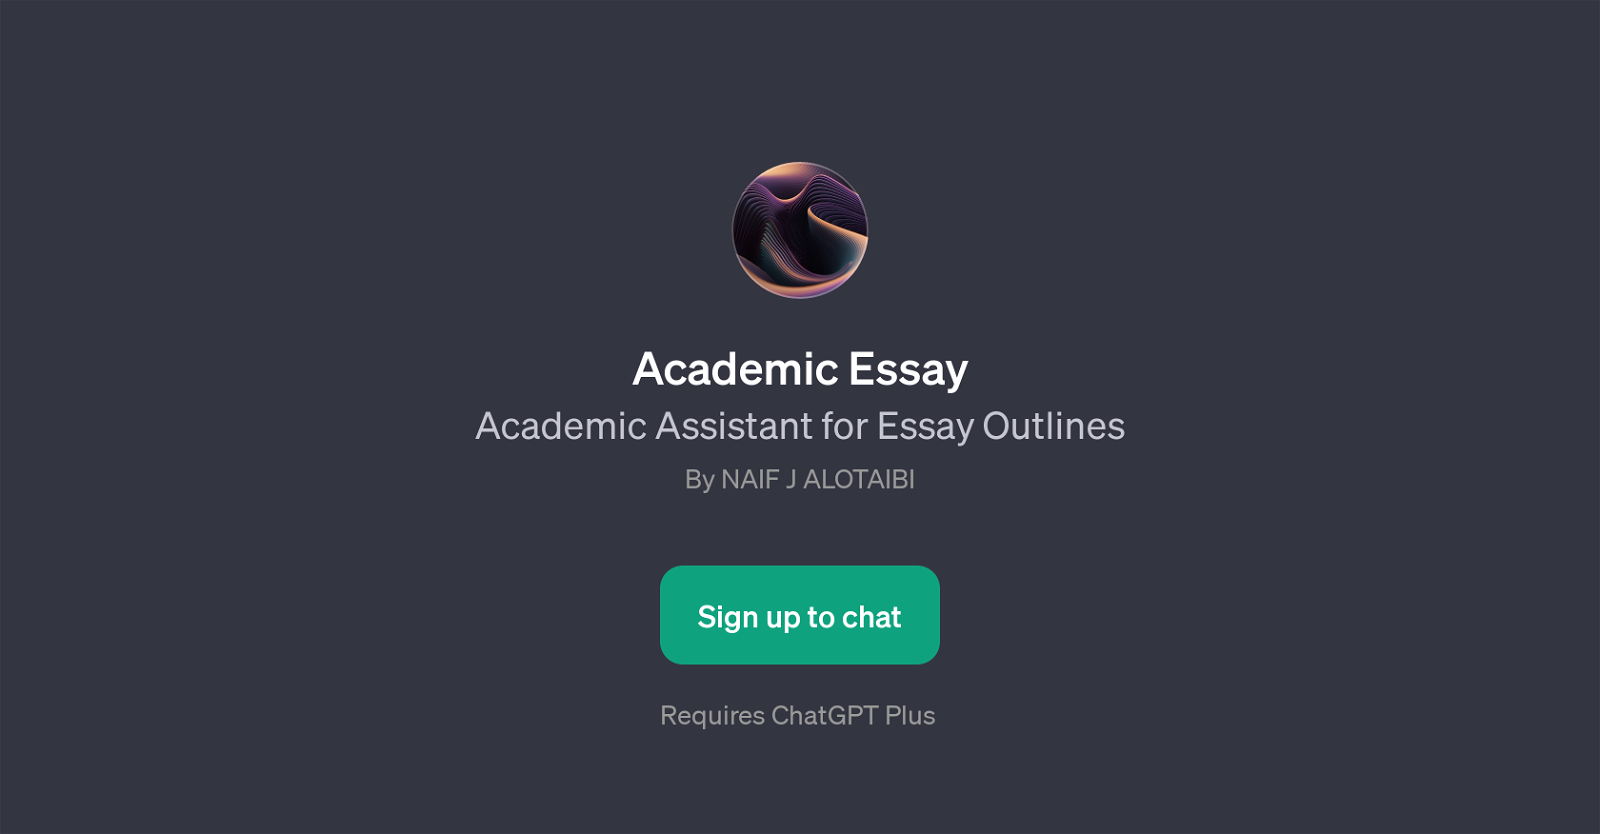 Academic Essay website